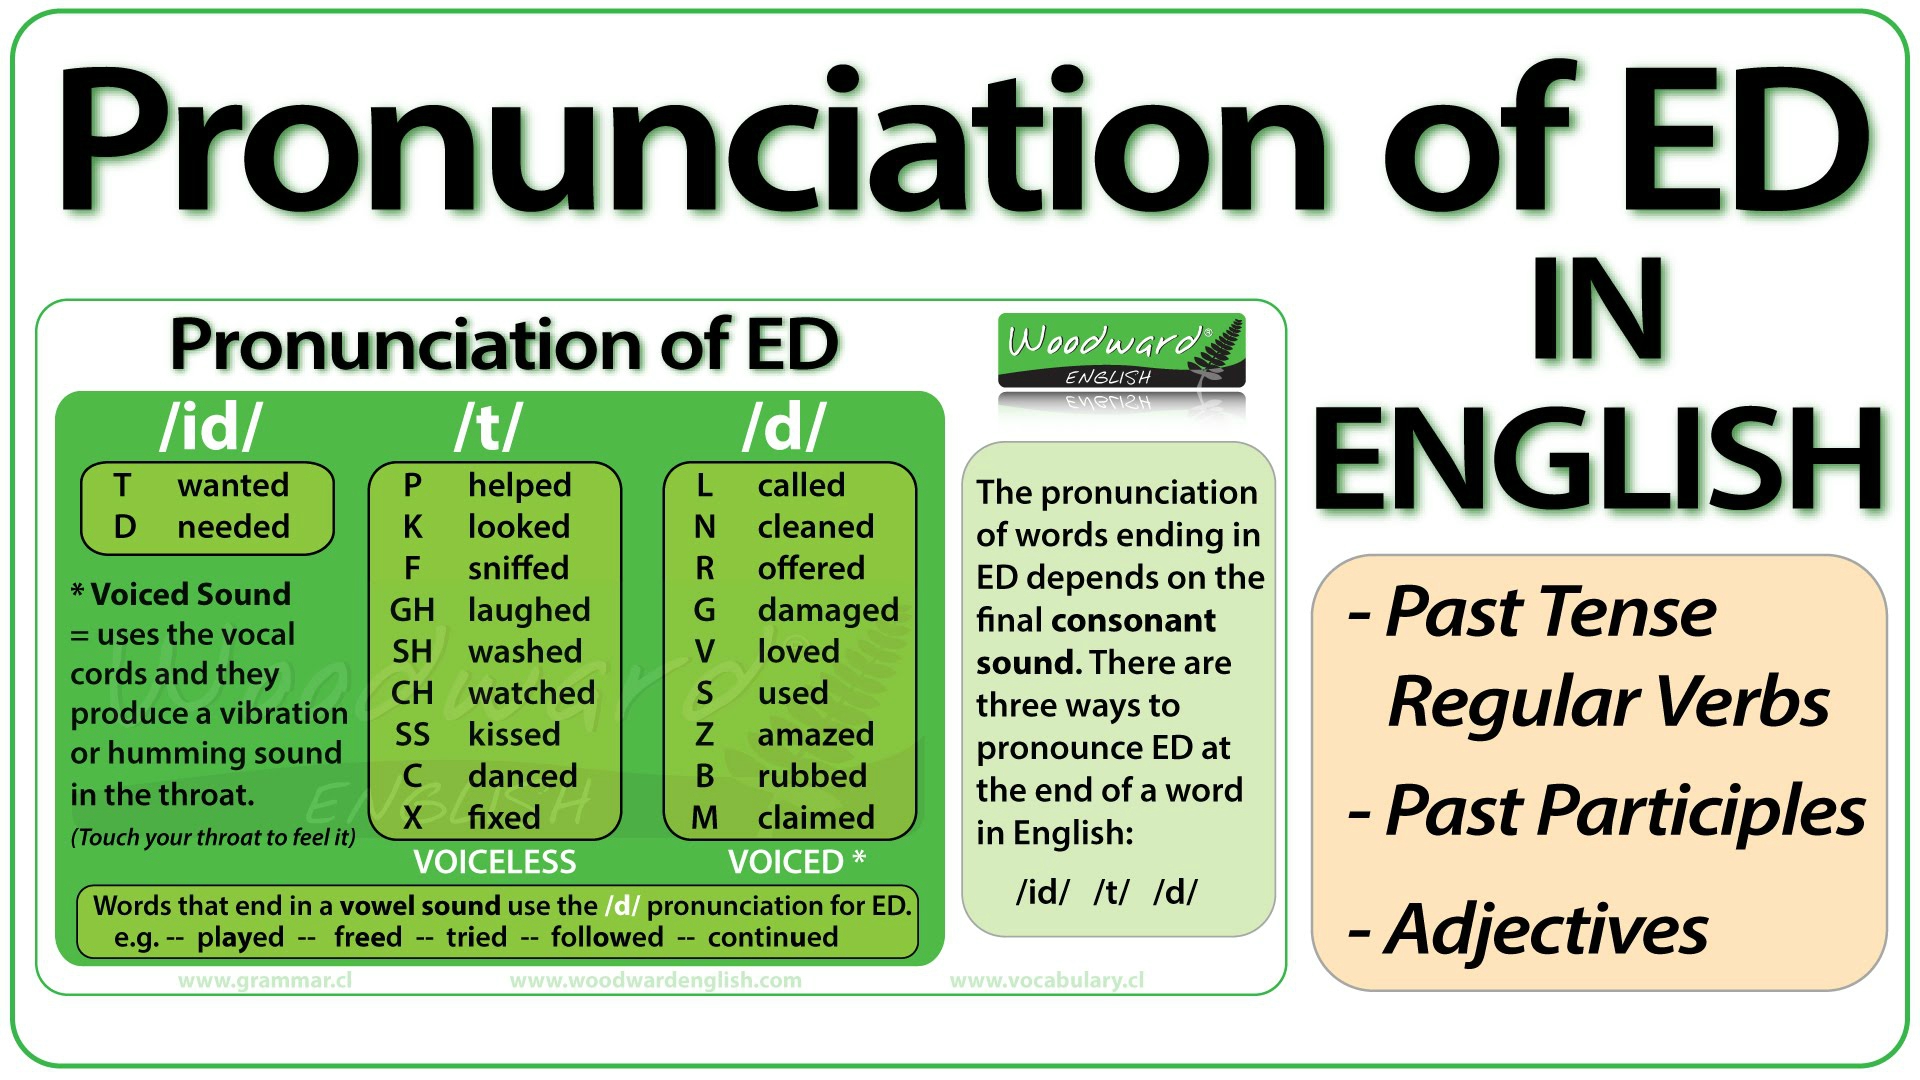 ed-pronunciation-mrs-cantegrit-s-english-class